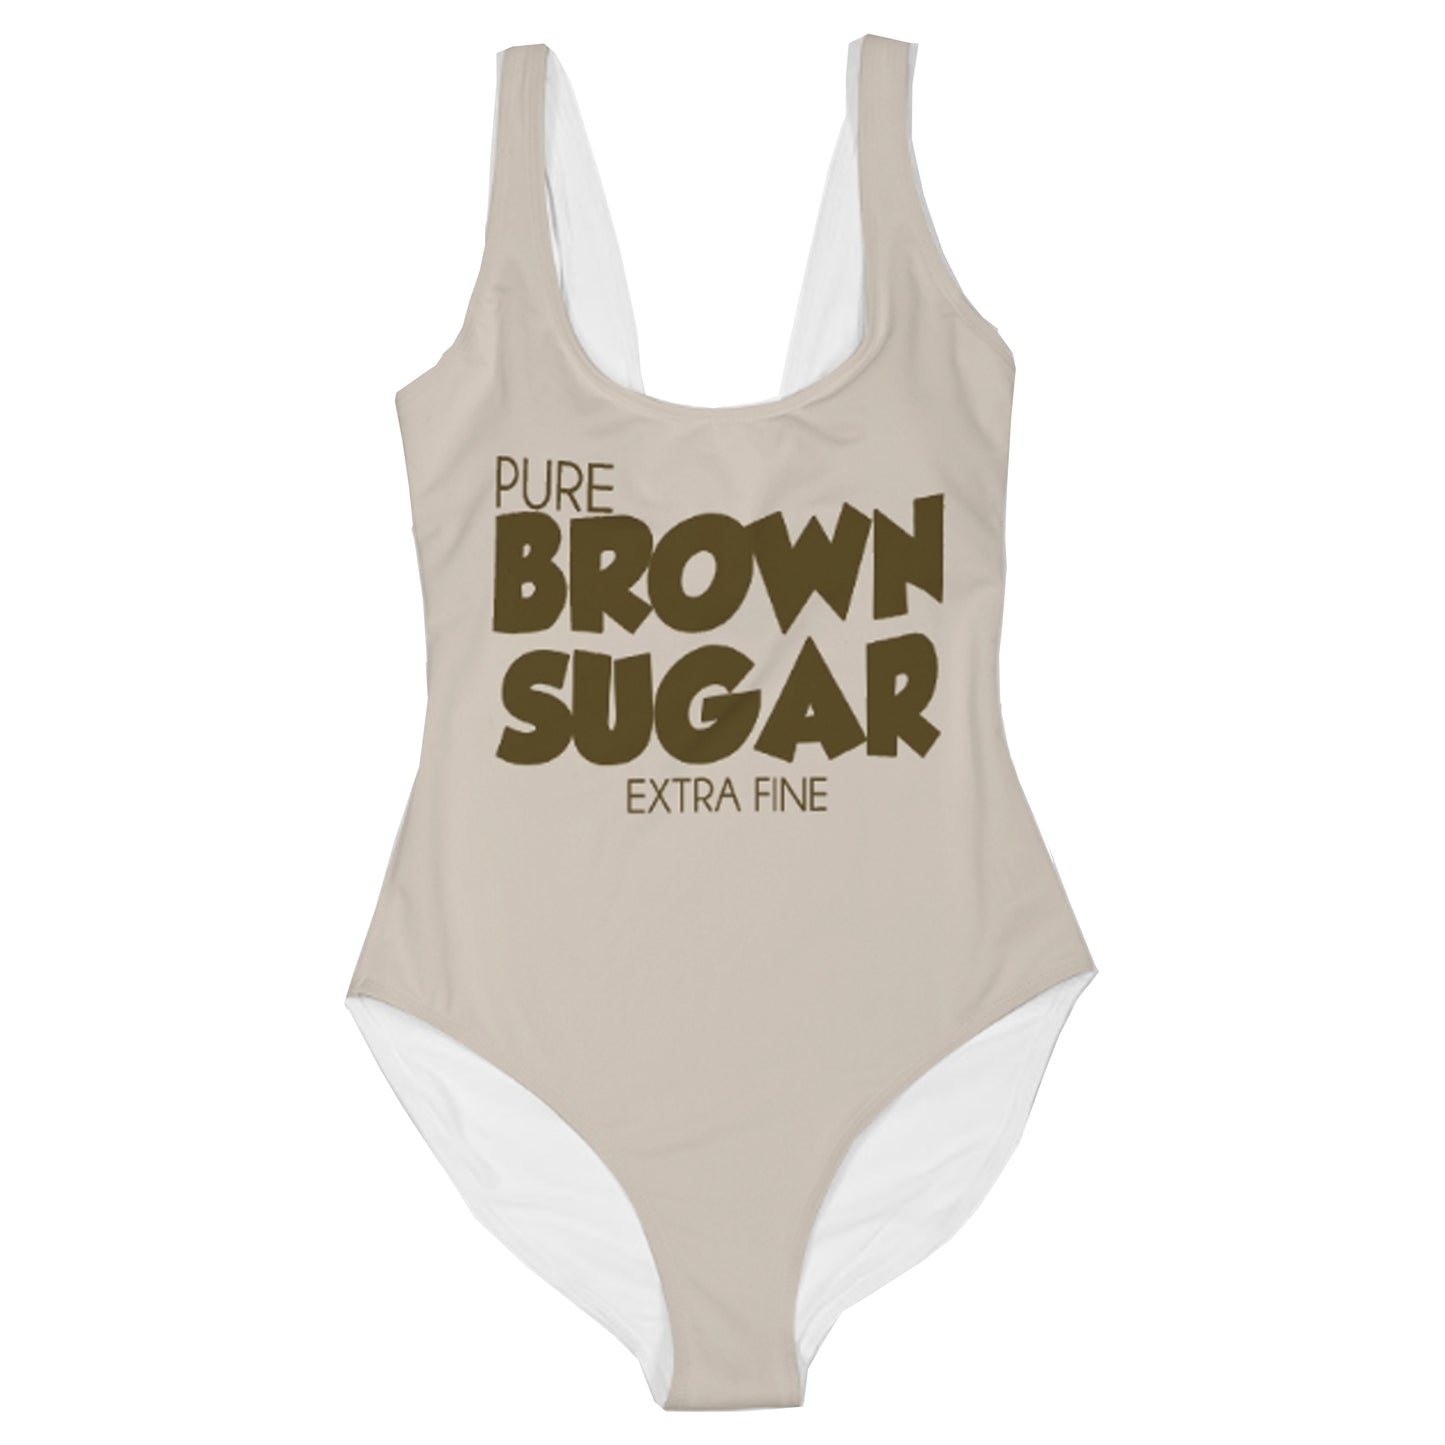 "Brown Sugar" Swimsuit